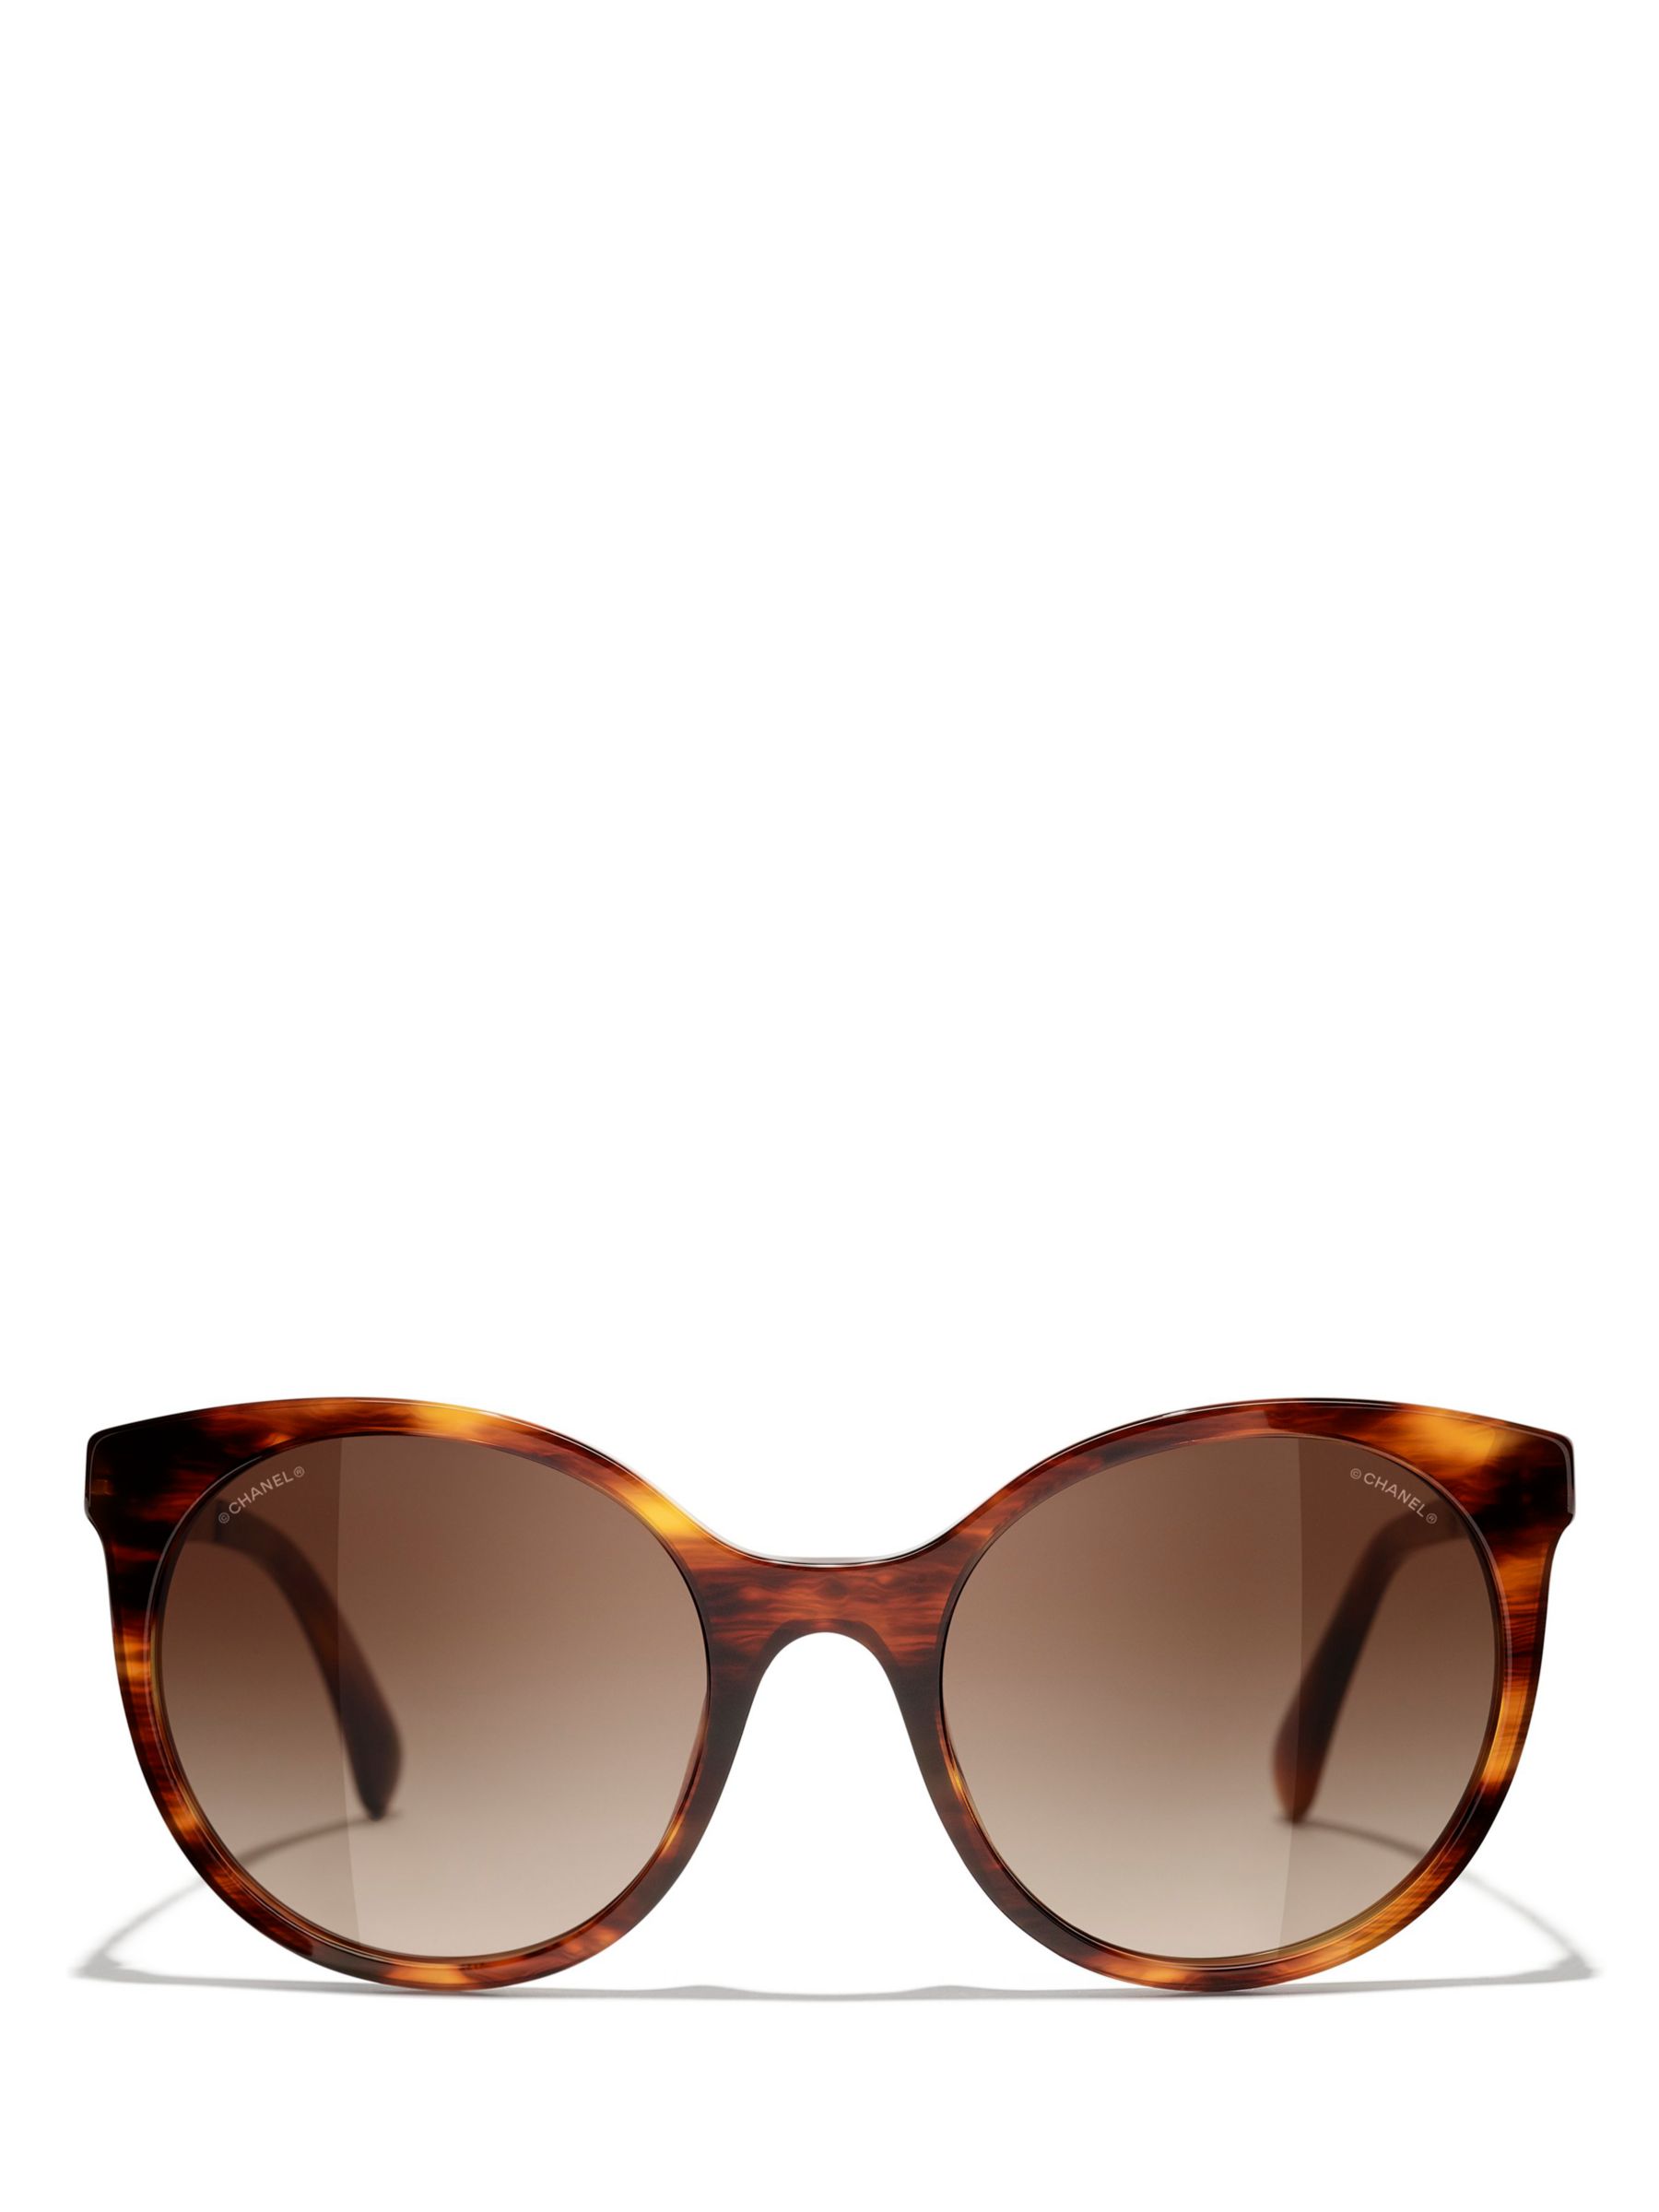 Chanel Pantos Sunglasses 1077S5 Brown